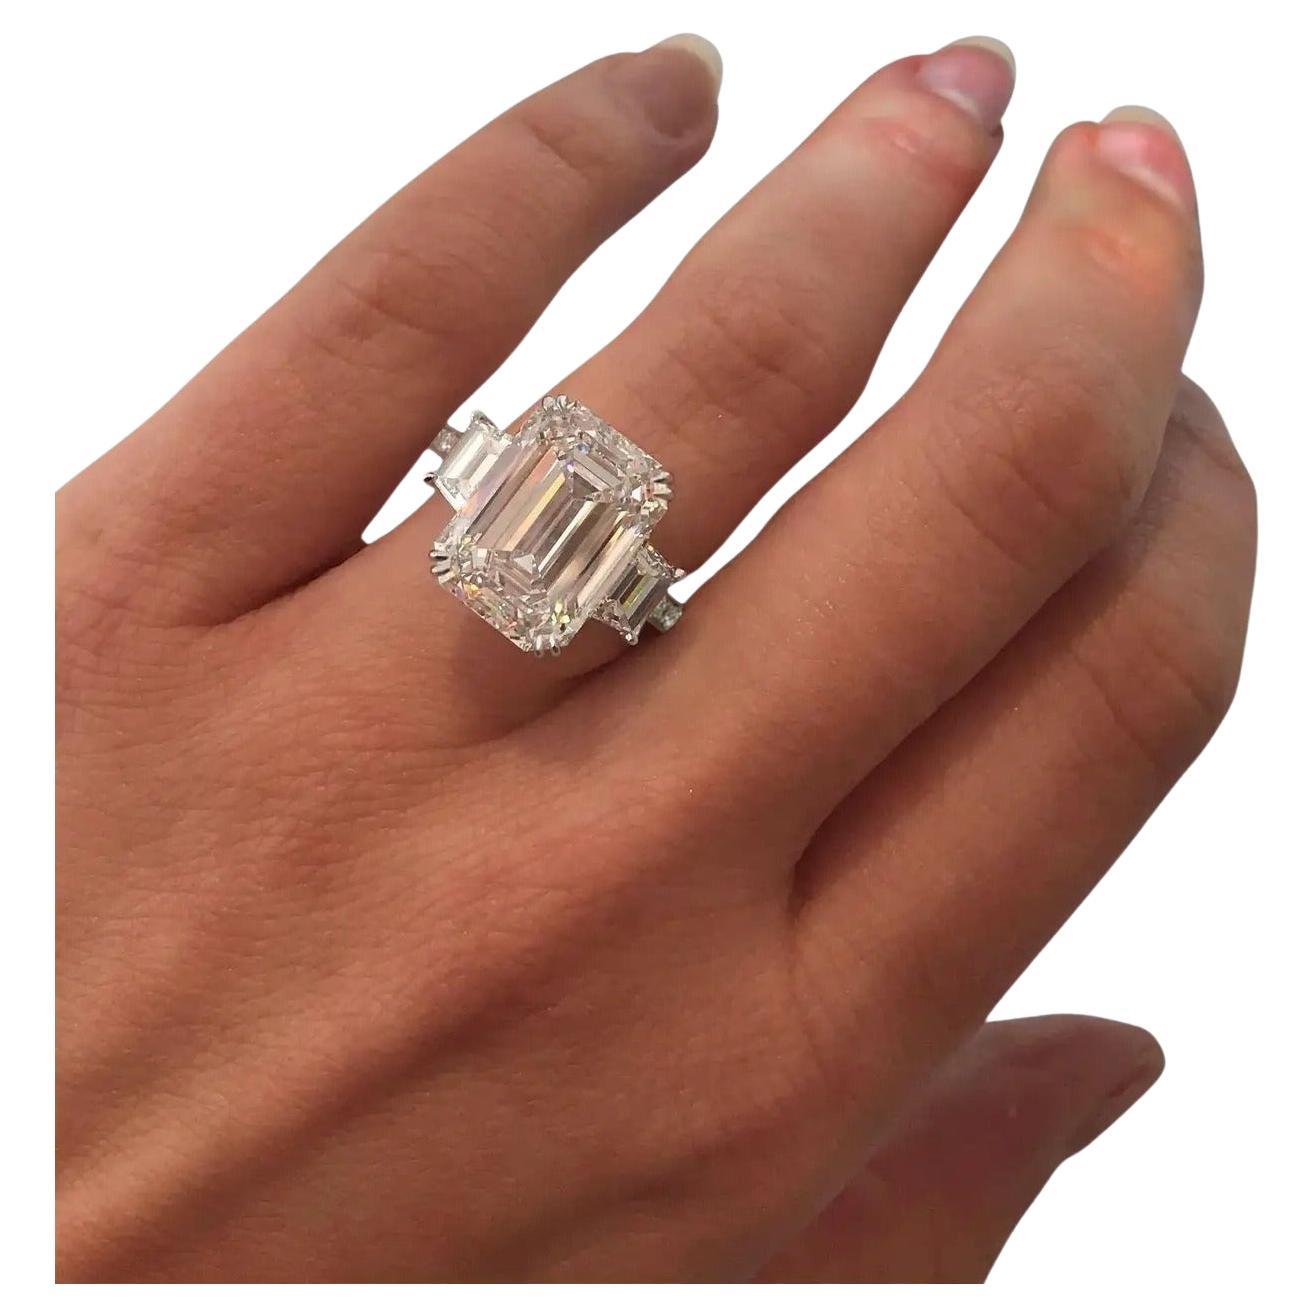 4 Carat Diamond Ring | Barkev's